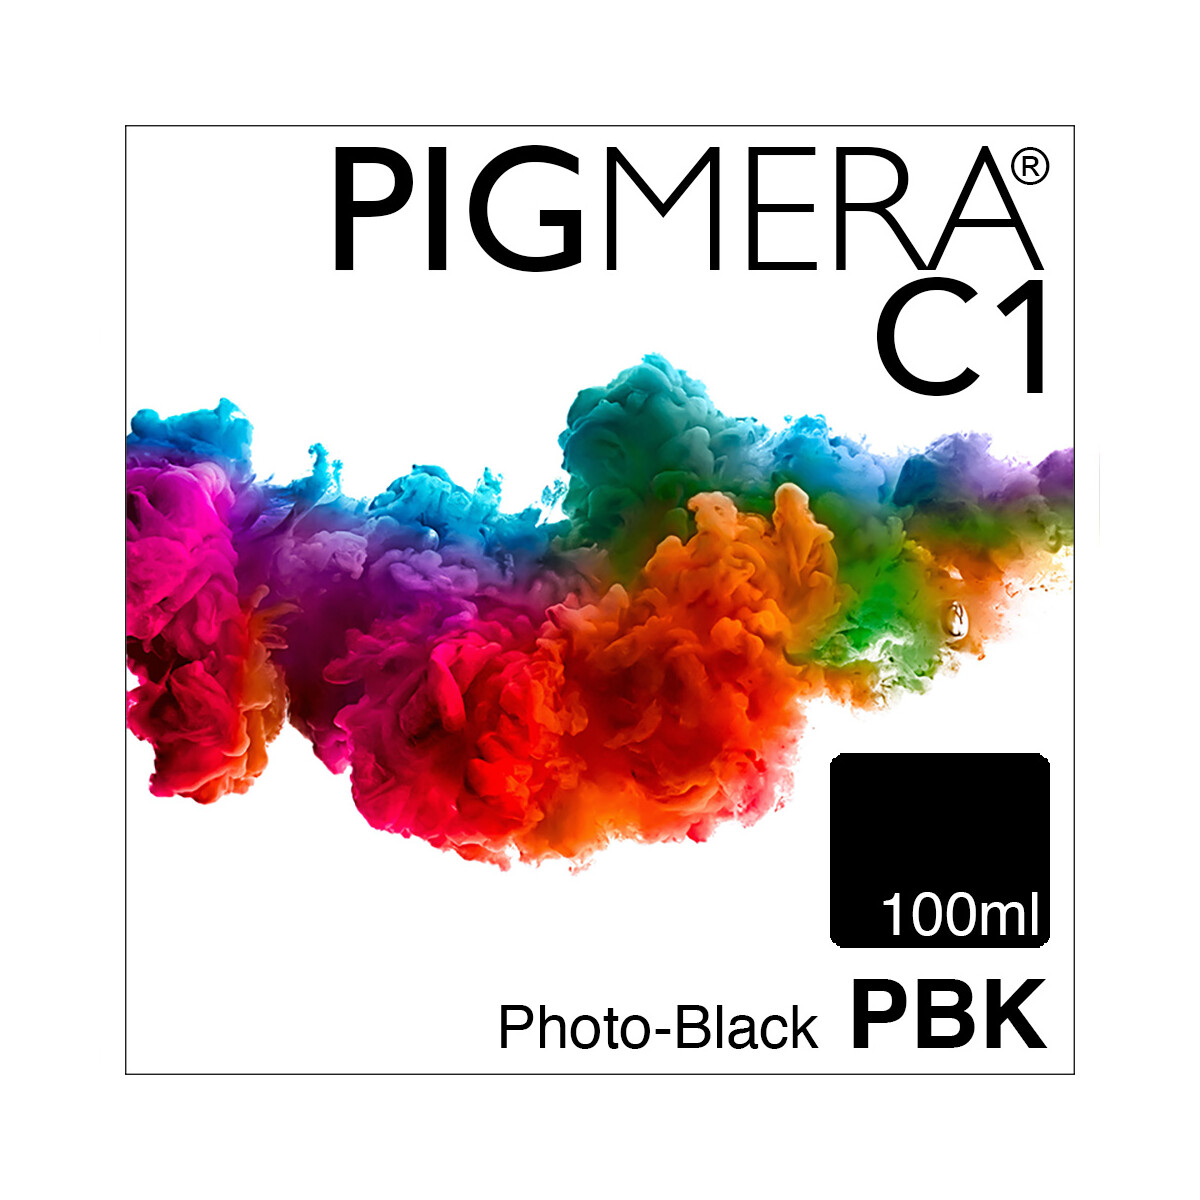 farbenwerk Pigmera C1 Bottle Photo-Black 100ml